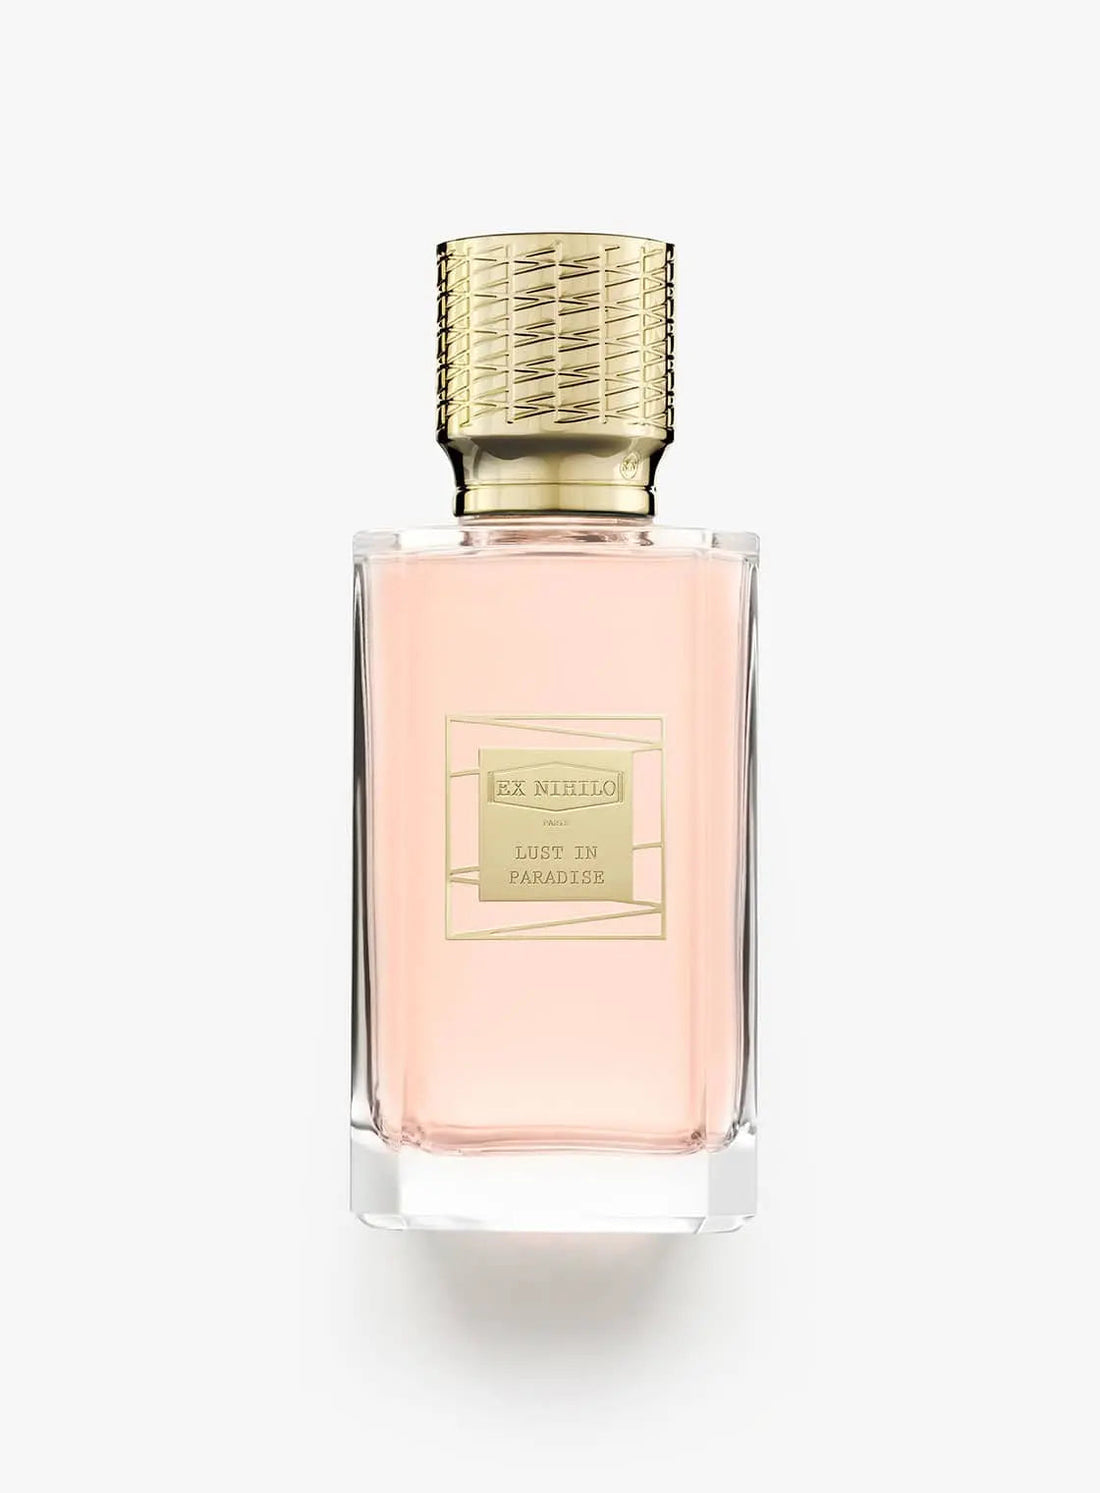 Ex nihilo Lust in Paradise eau de parfum - 50 ml